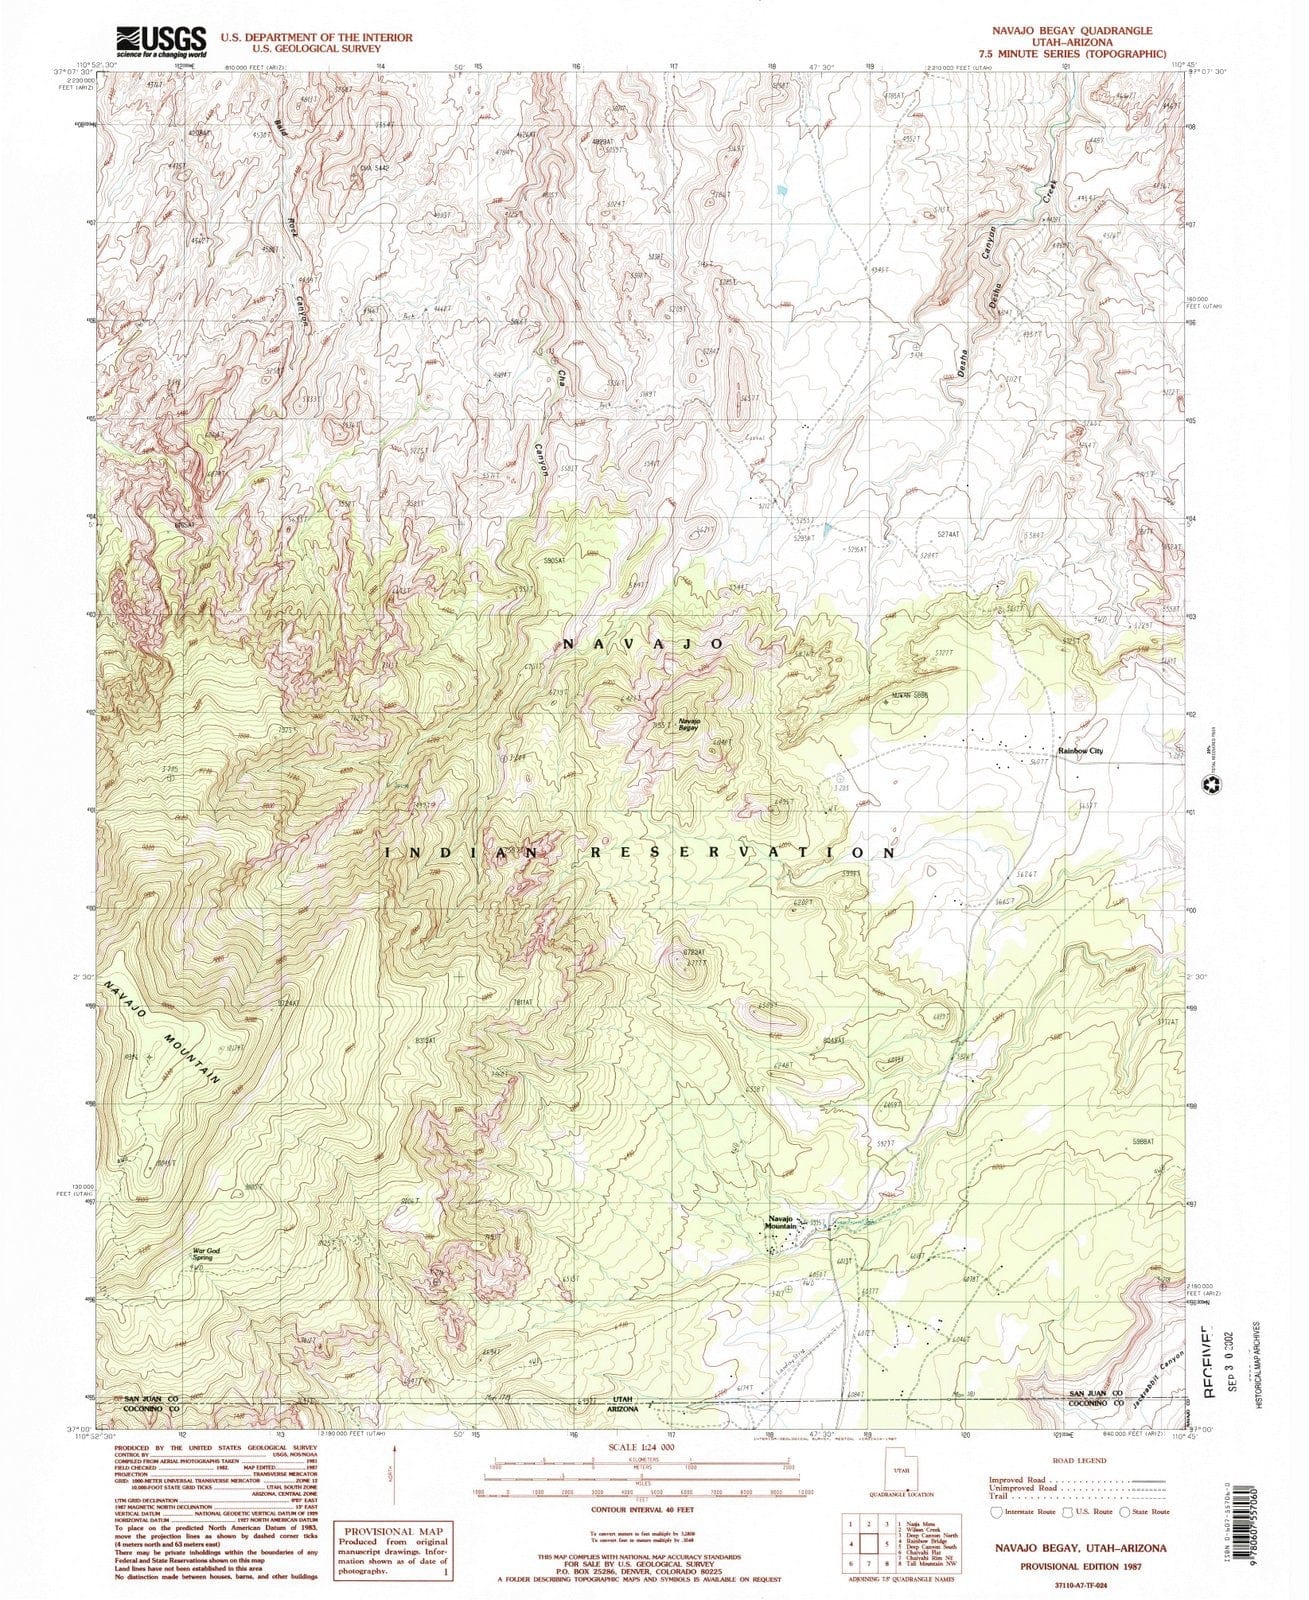 1987 Navajo Begay, UT - Utah - USGS Topographic Map